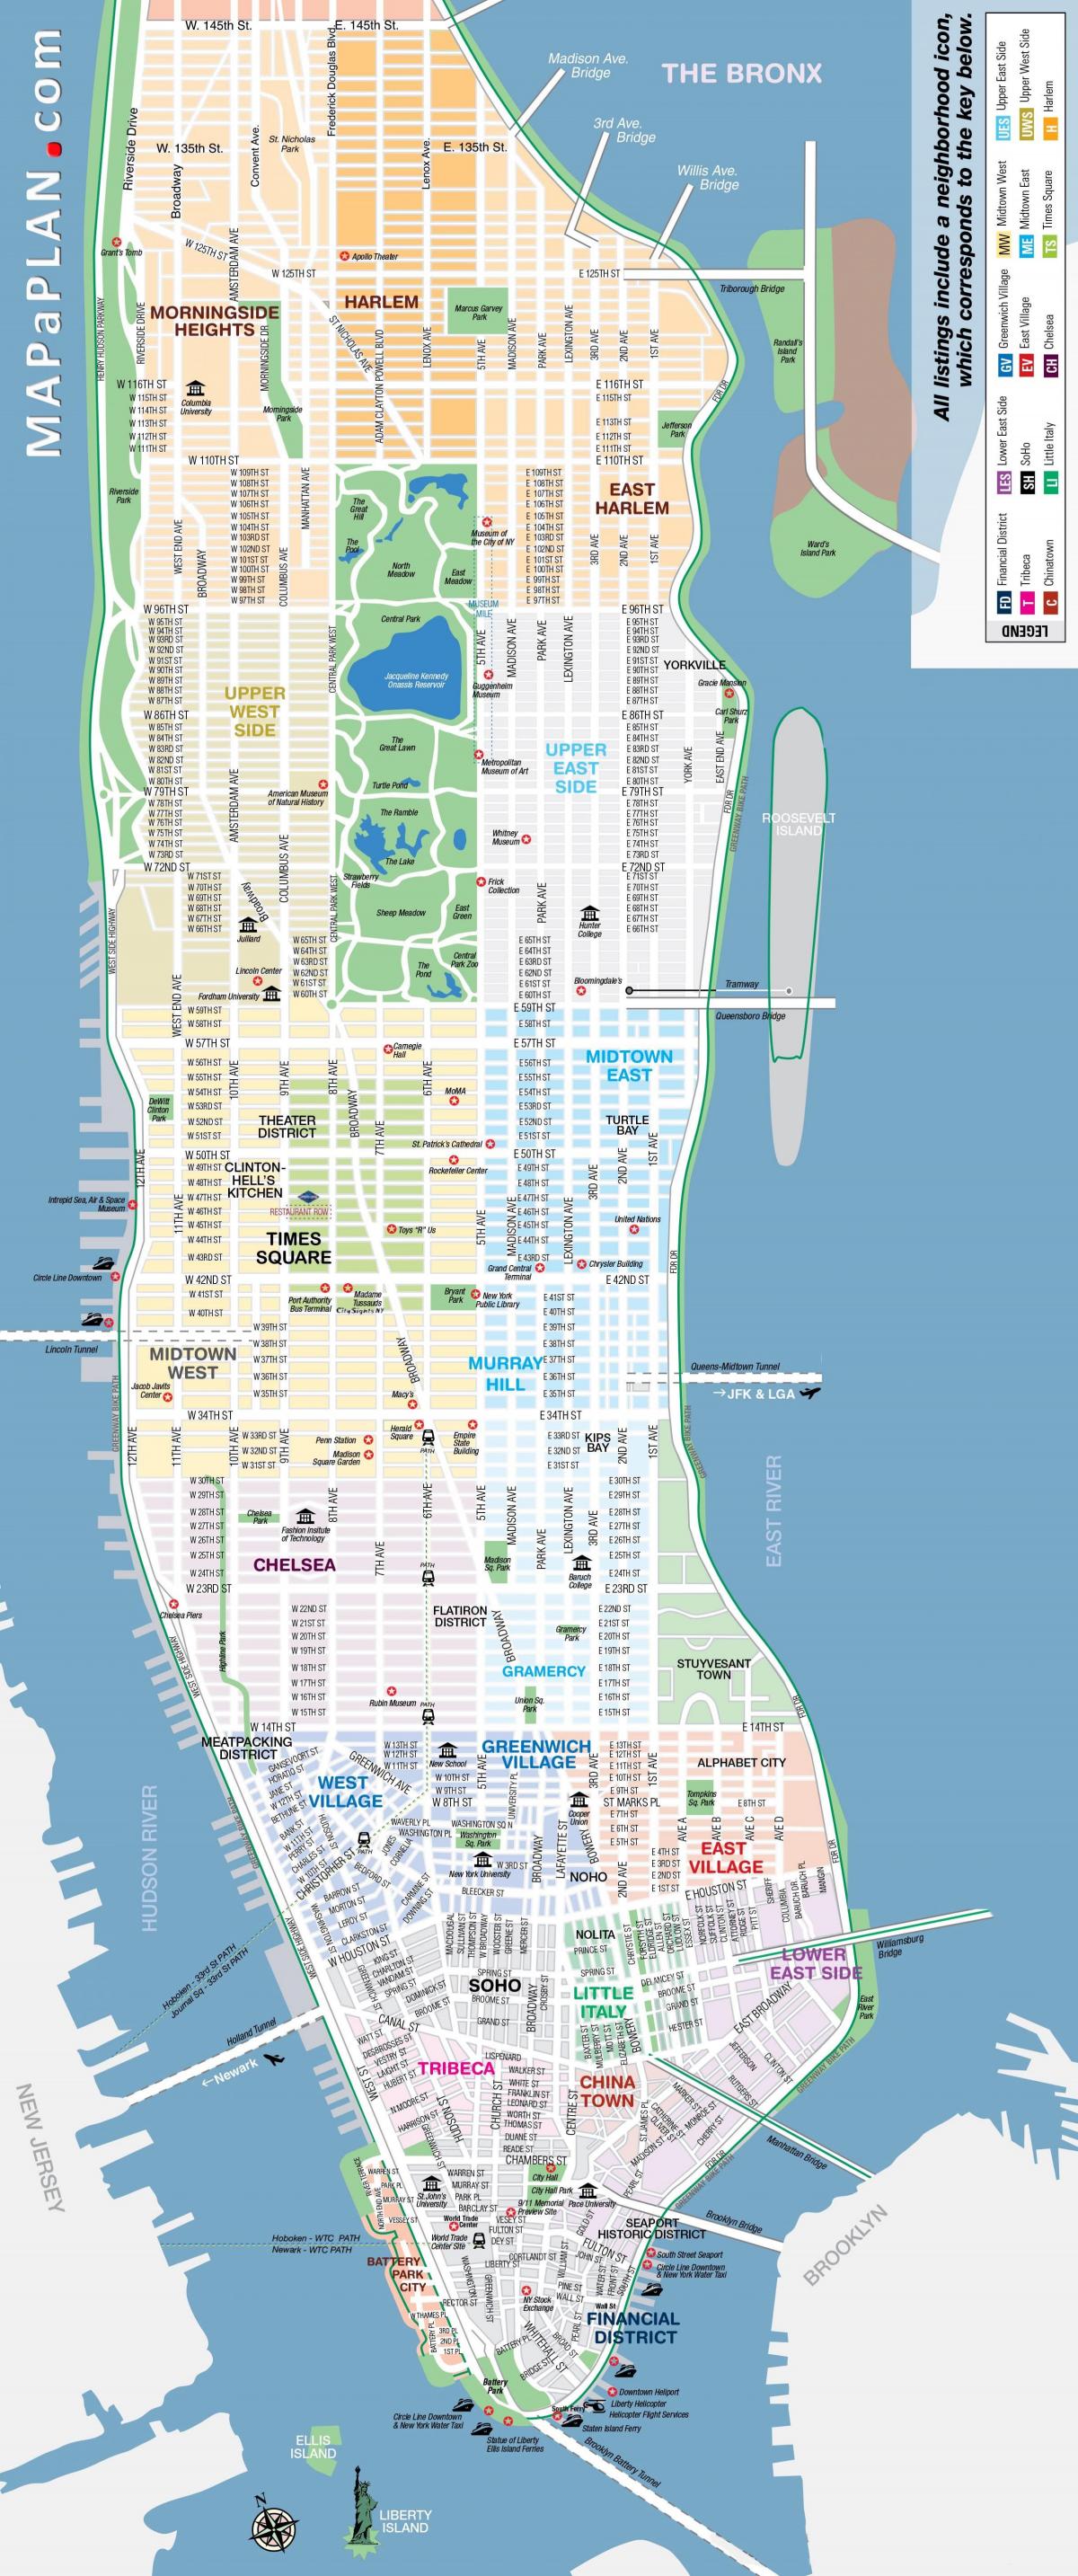 Manhattan streets map